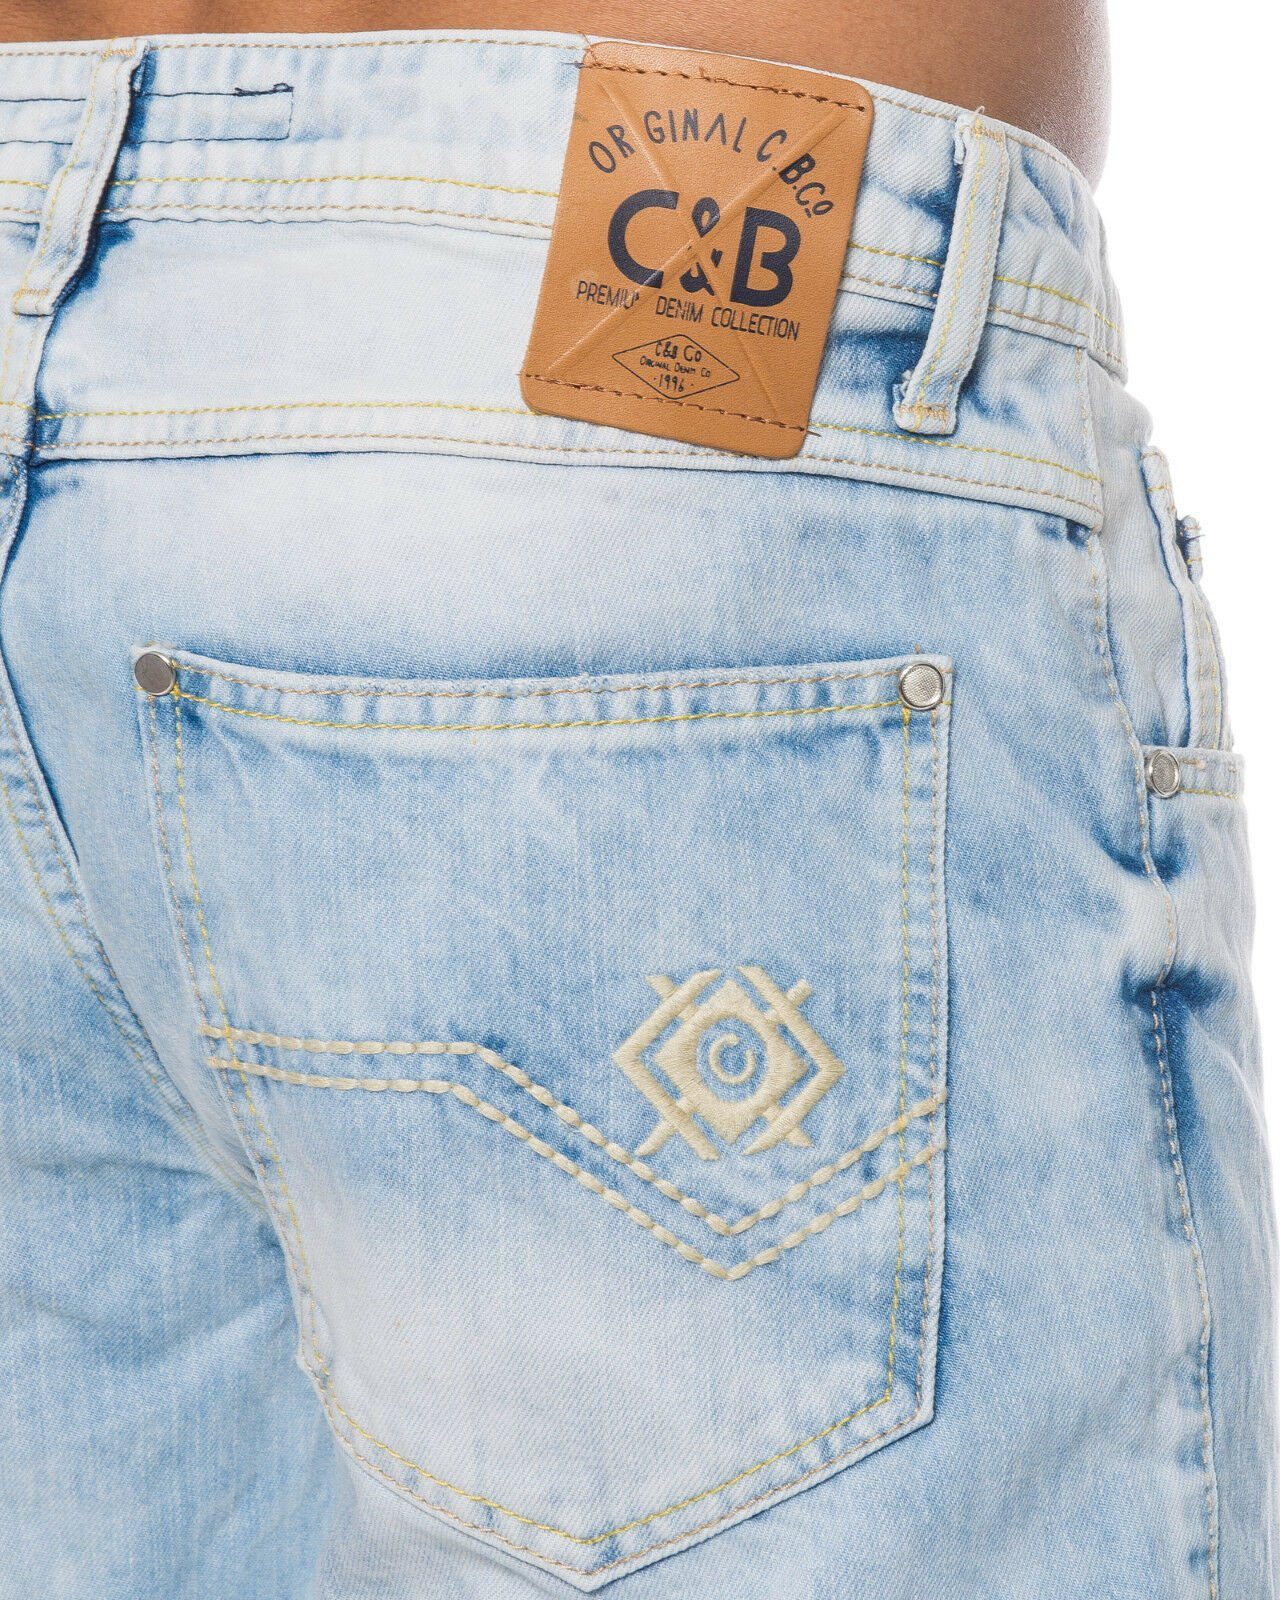 Herren mit Hose Nähten Regular-fit-Jeans Jeans dezenten Look mit Nähten im Baxx & dezenten Cipo schlichten Jeans